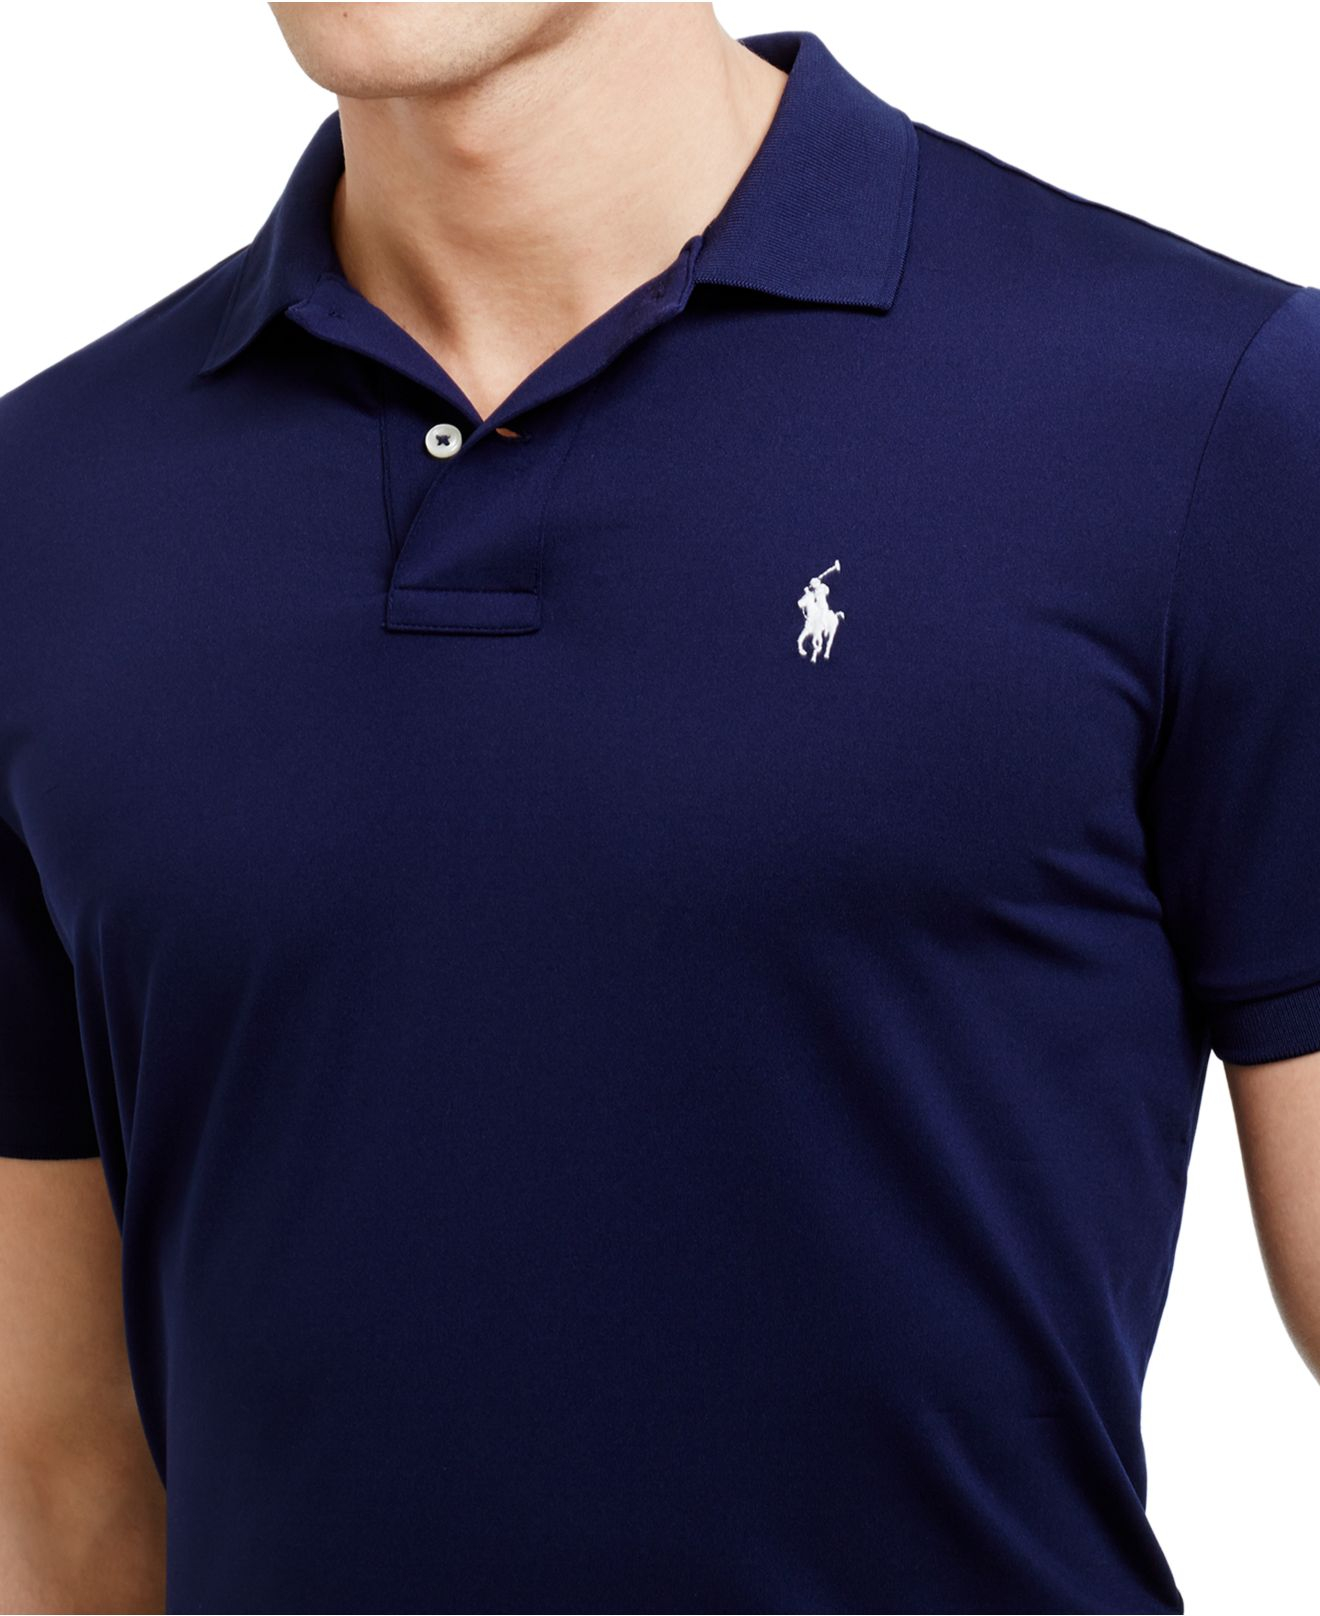 Polo Ralph Lauren Performance Polo Shirt in Blue for Men - Lyst